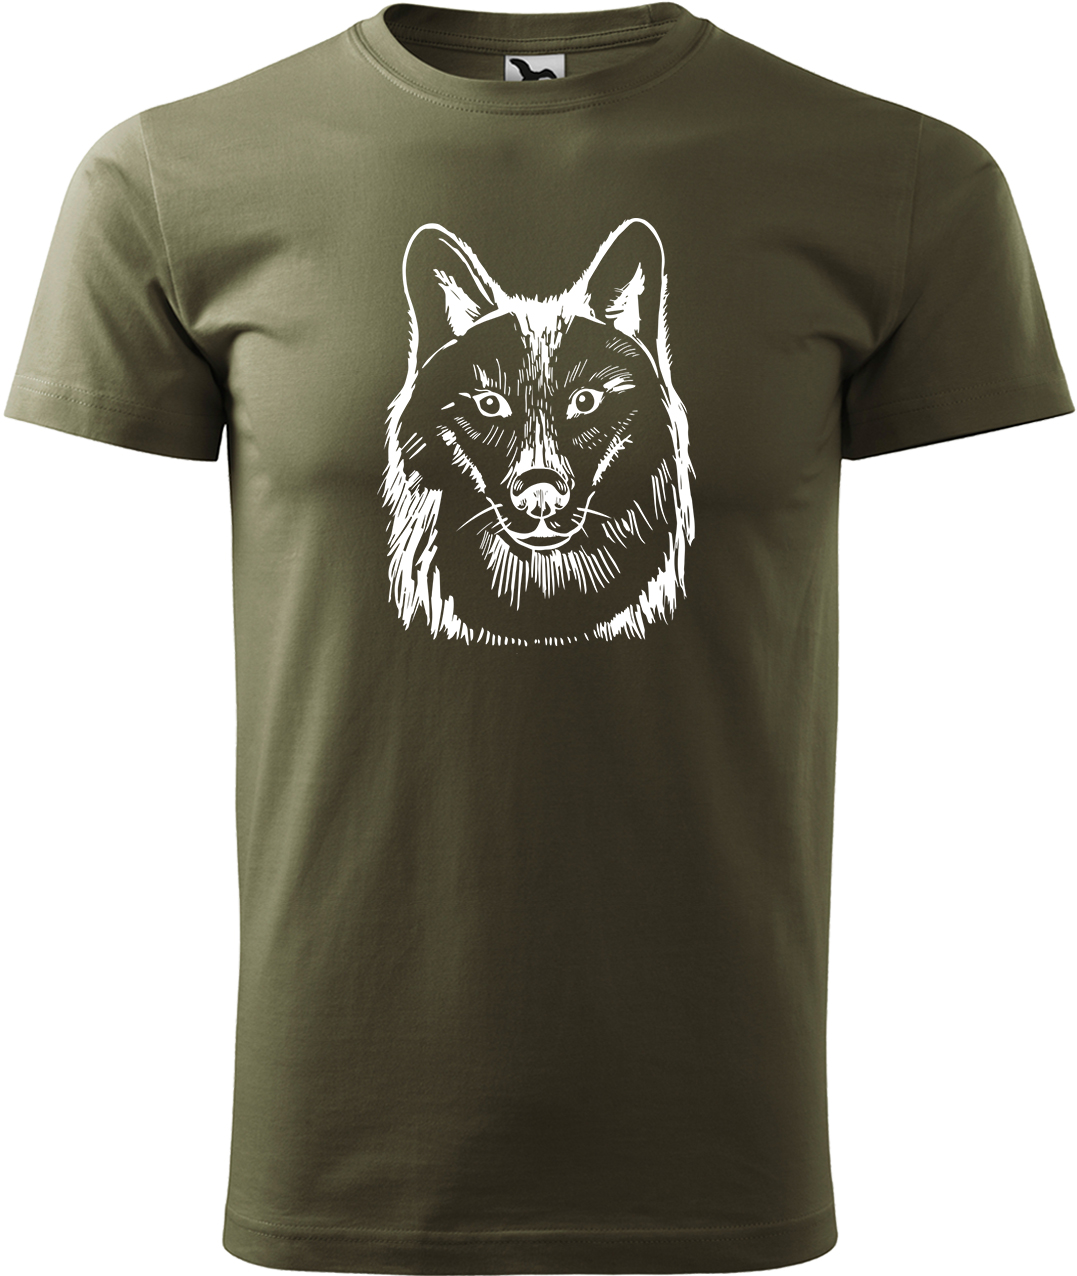 Pánské tričko s vlkem - Kresba vlka Velikost: M, Barva: Military (69), Střih: pánský